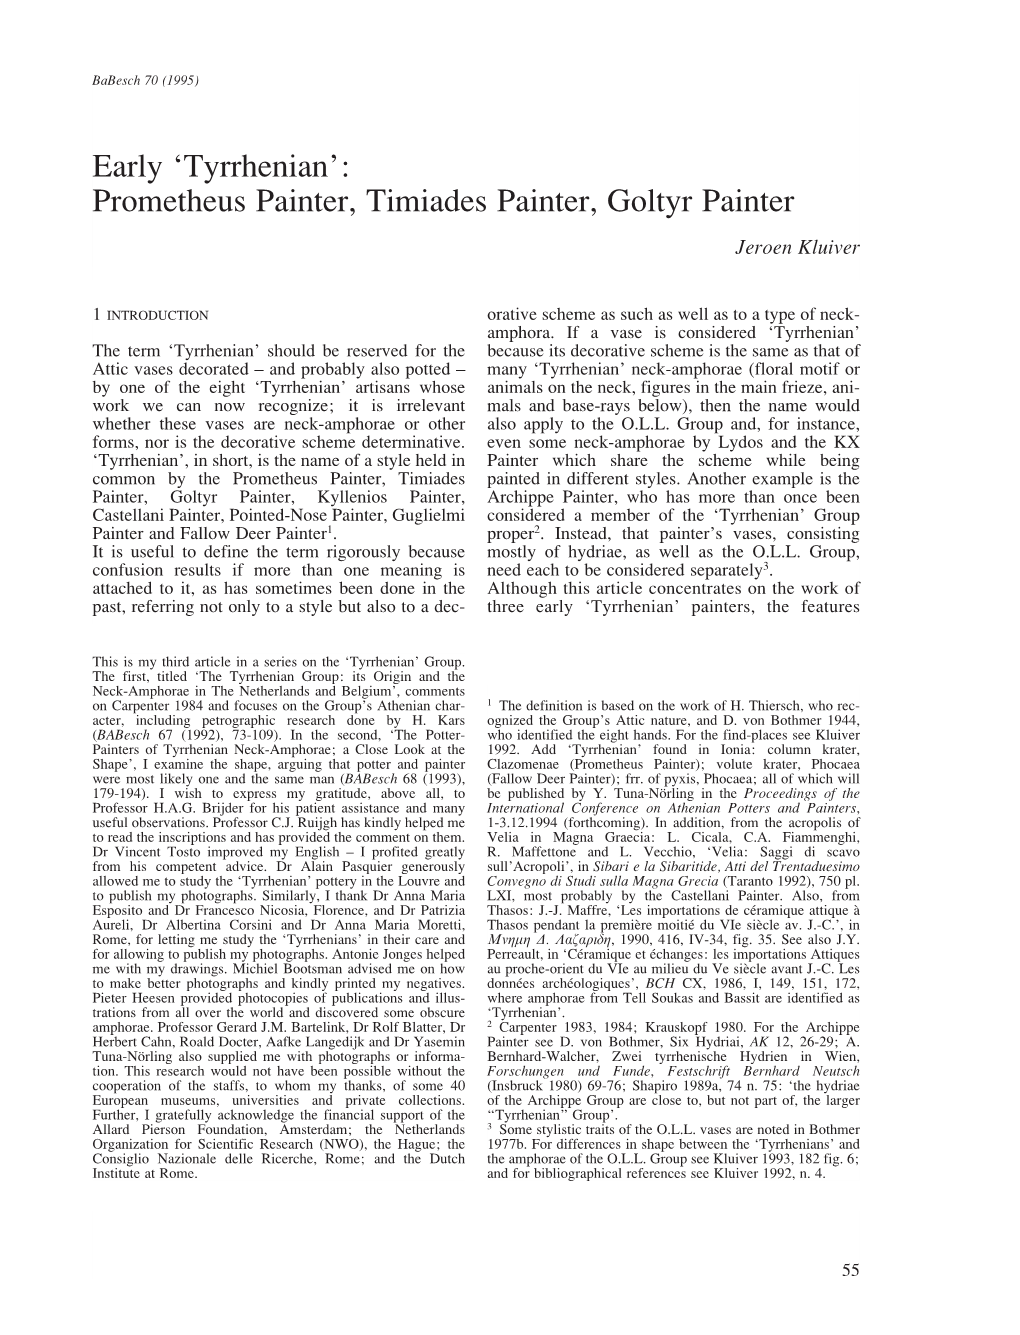 Early 'Tyrrhenian': Prometheus Painter, Timiades Painter, Goltyr Painter